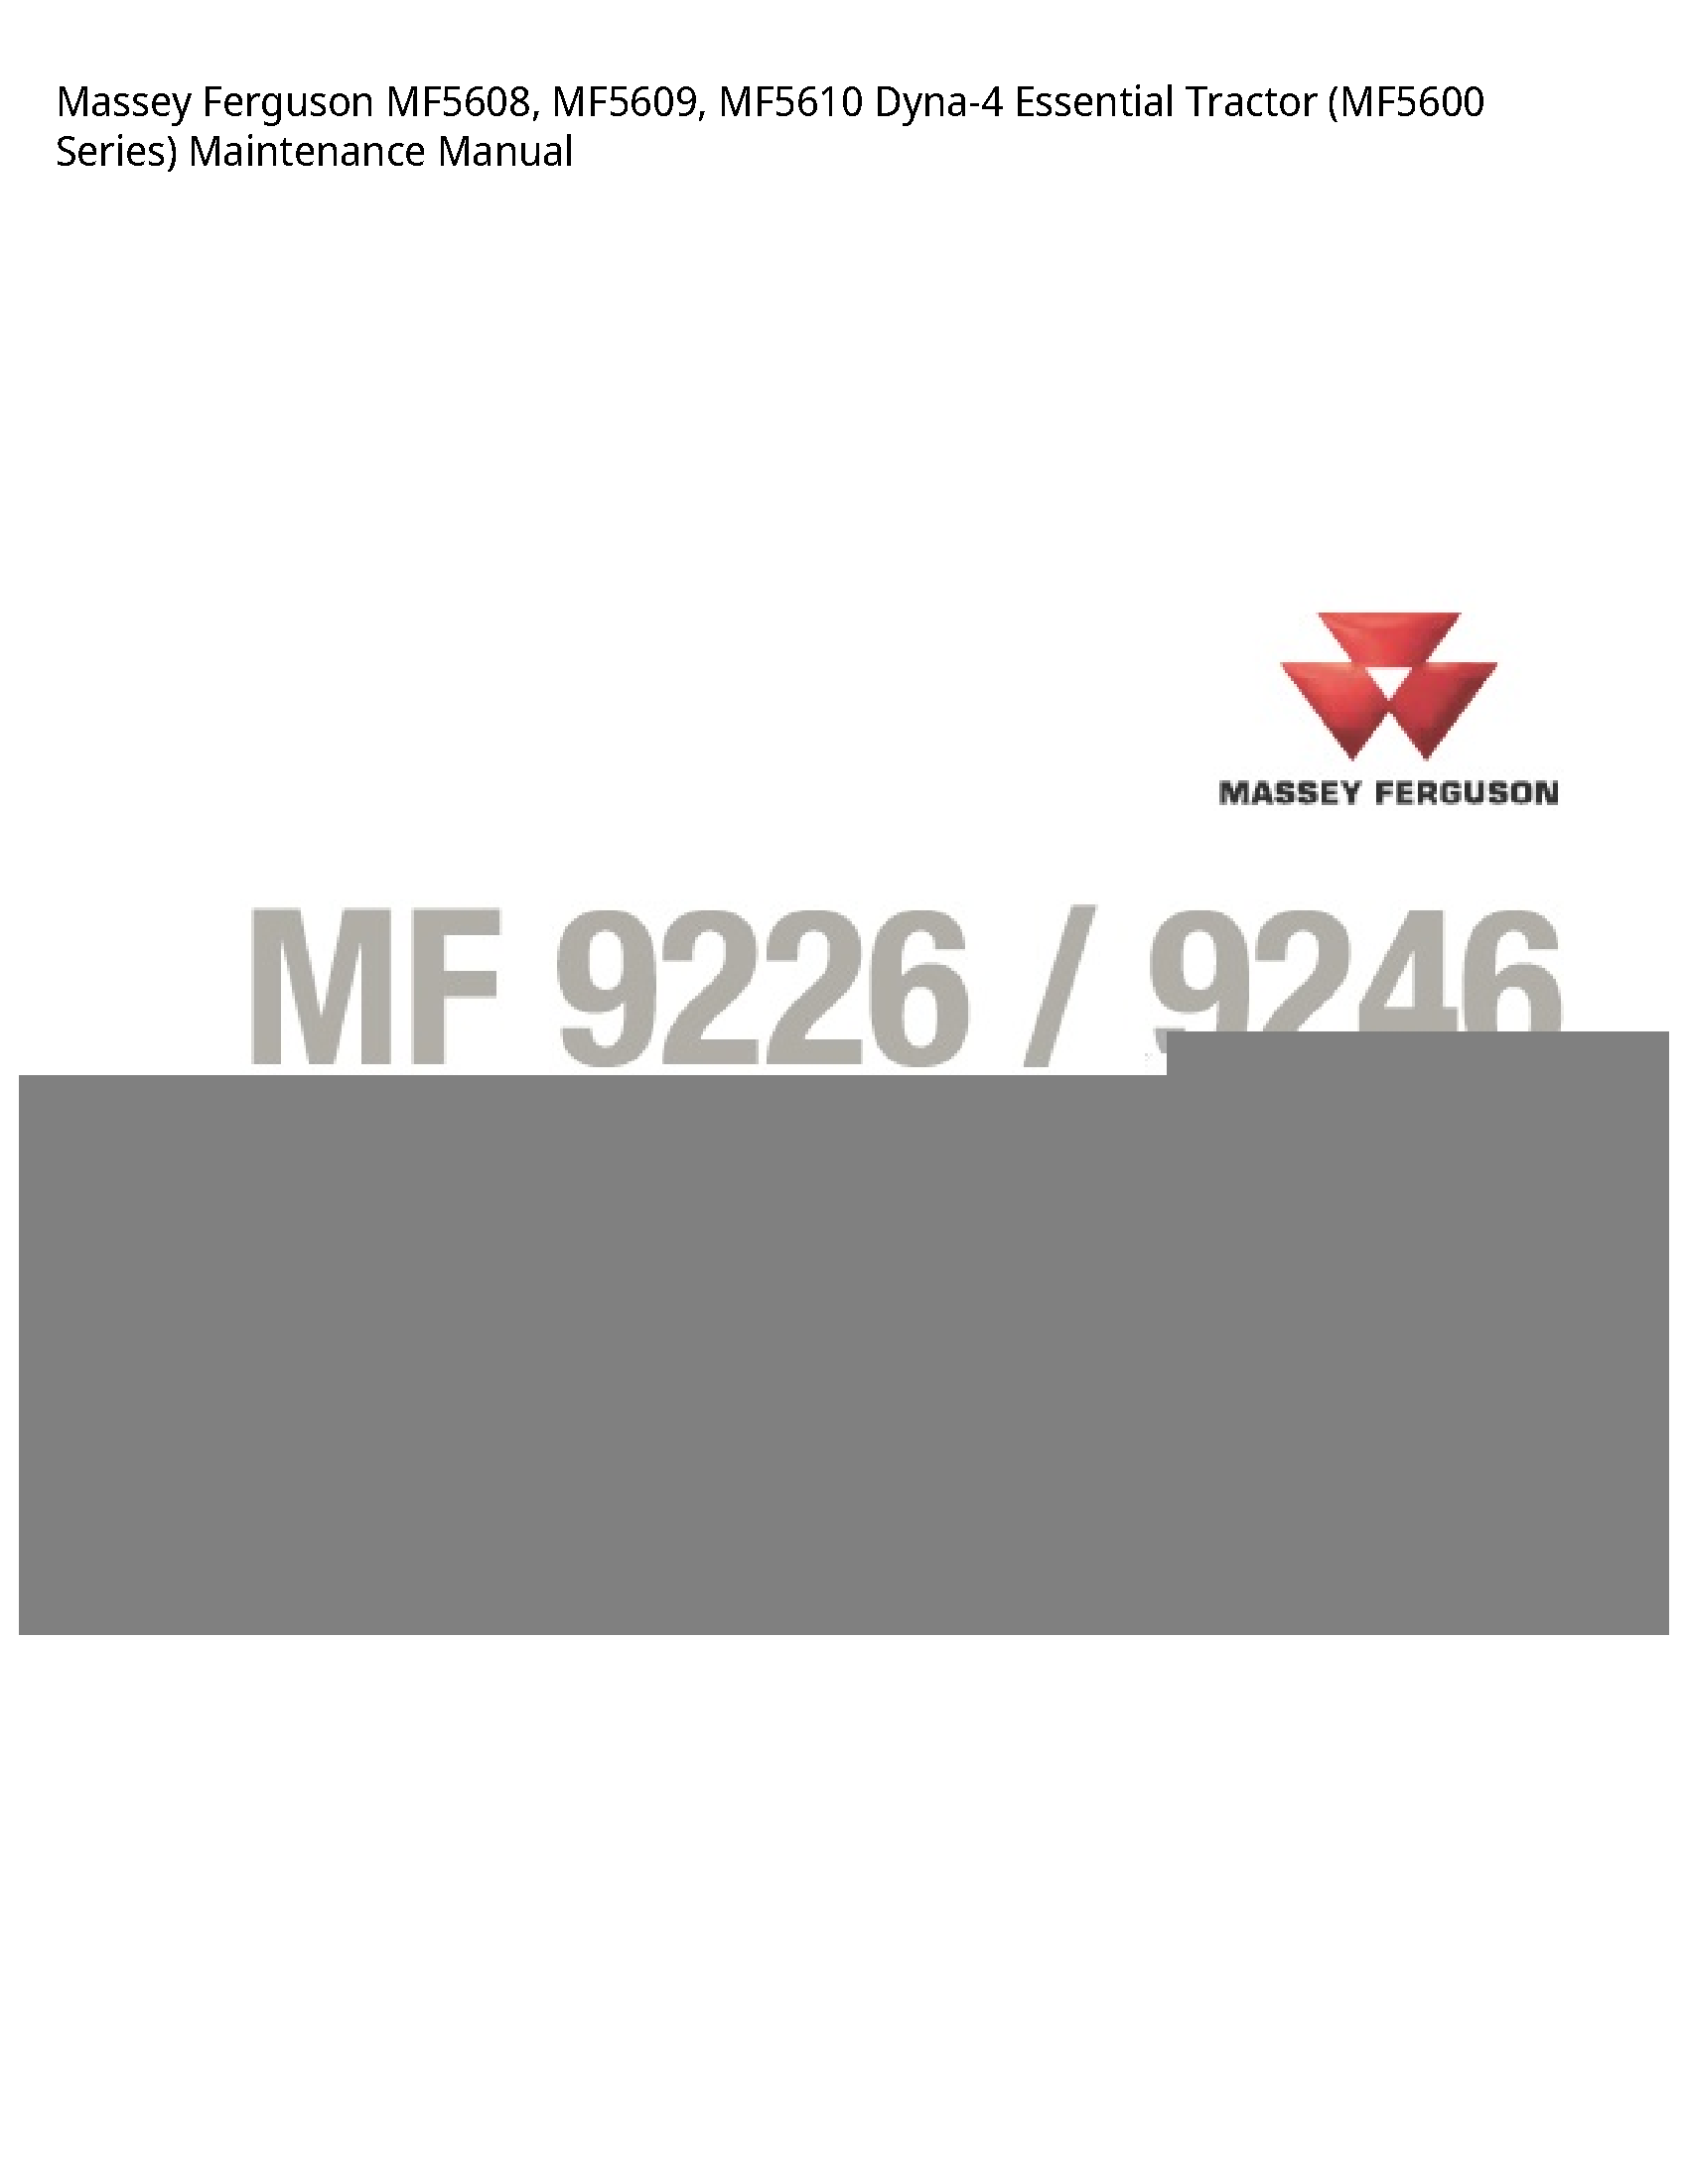 Massey Ferguson MF5608 Essential Tractor Series) Maintenance manual